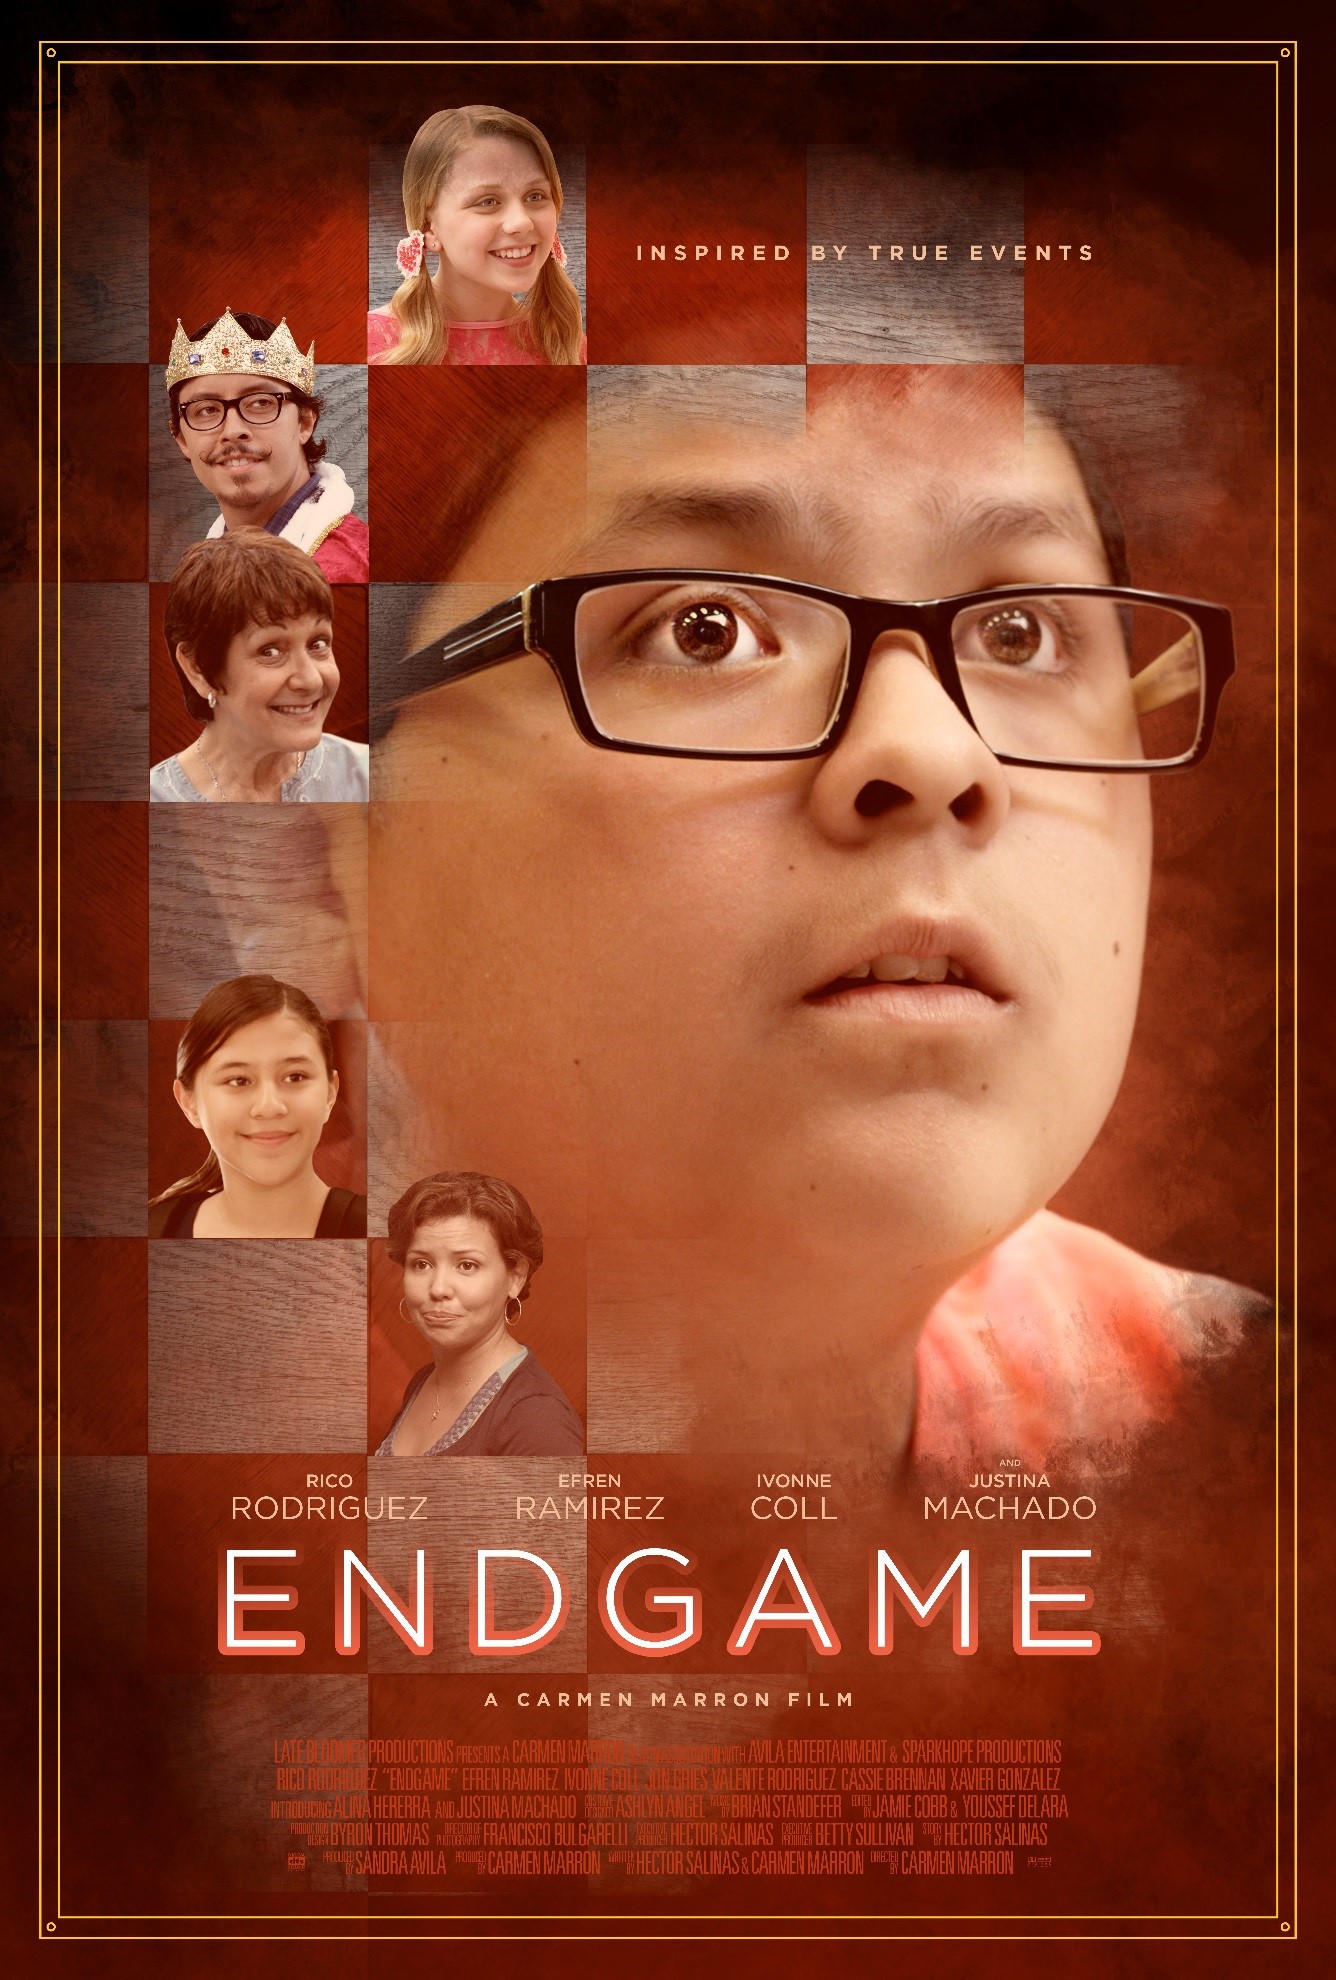 Ivonne Coll, Justina Machado, Efren Ramirez and Rico Rodriguez in Endgame (2015)